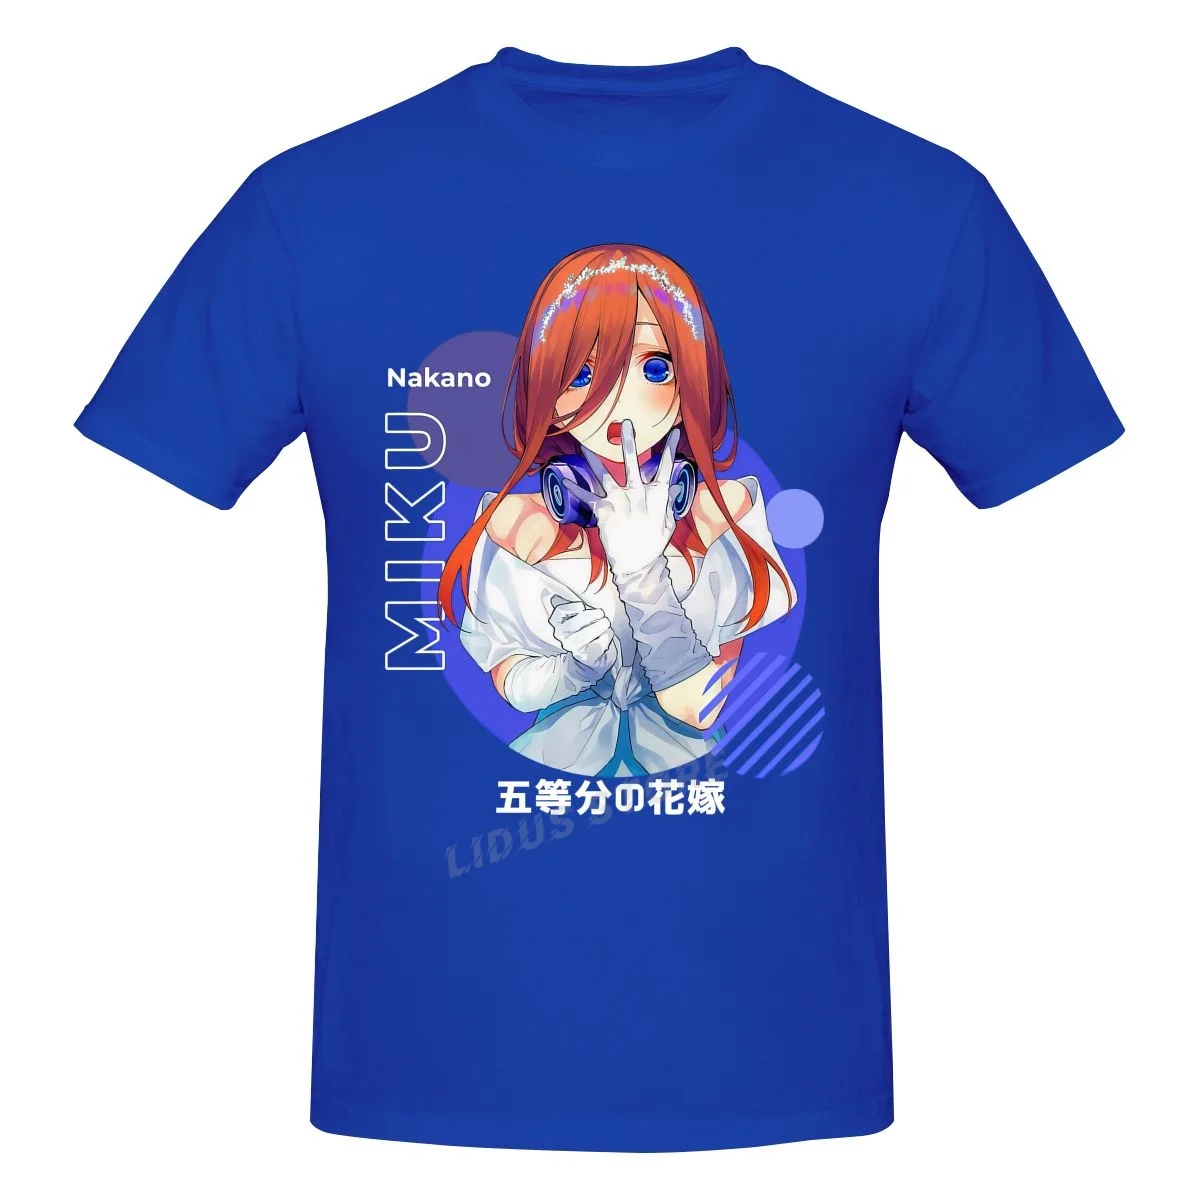 

Japan Anime The Quintessential Quintuplets Miku Nakano 5 Toubun No Hanayome T shirt Harajuku Clothing Graphic Tshirt Tees